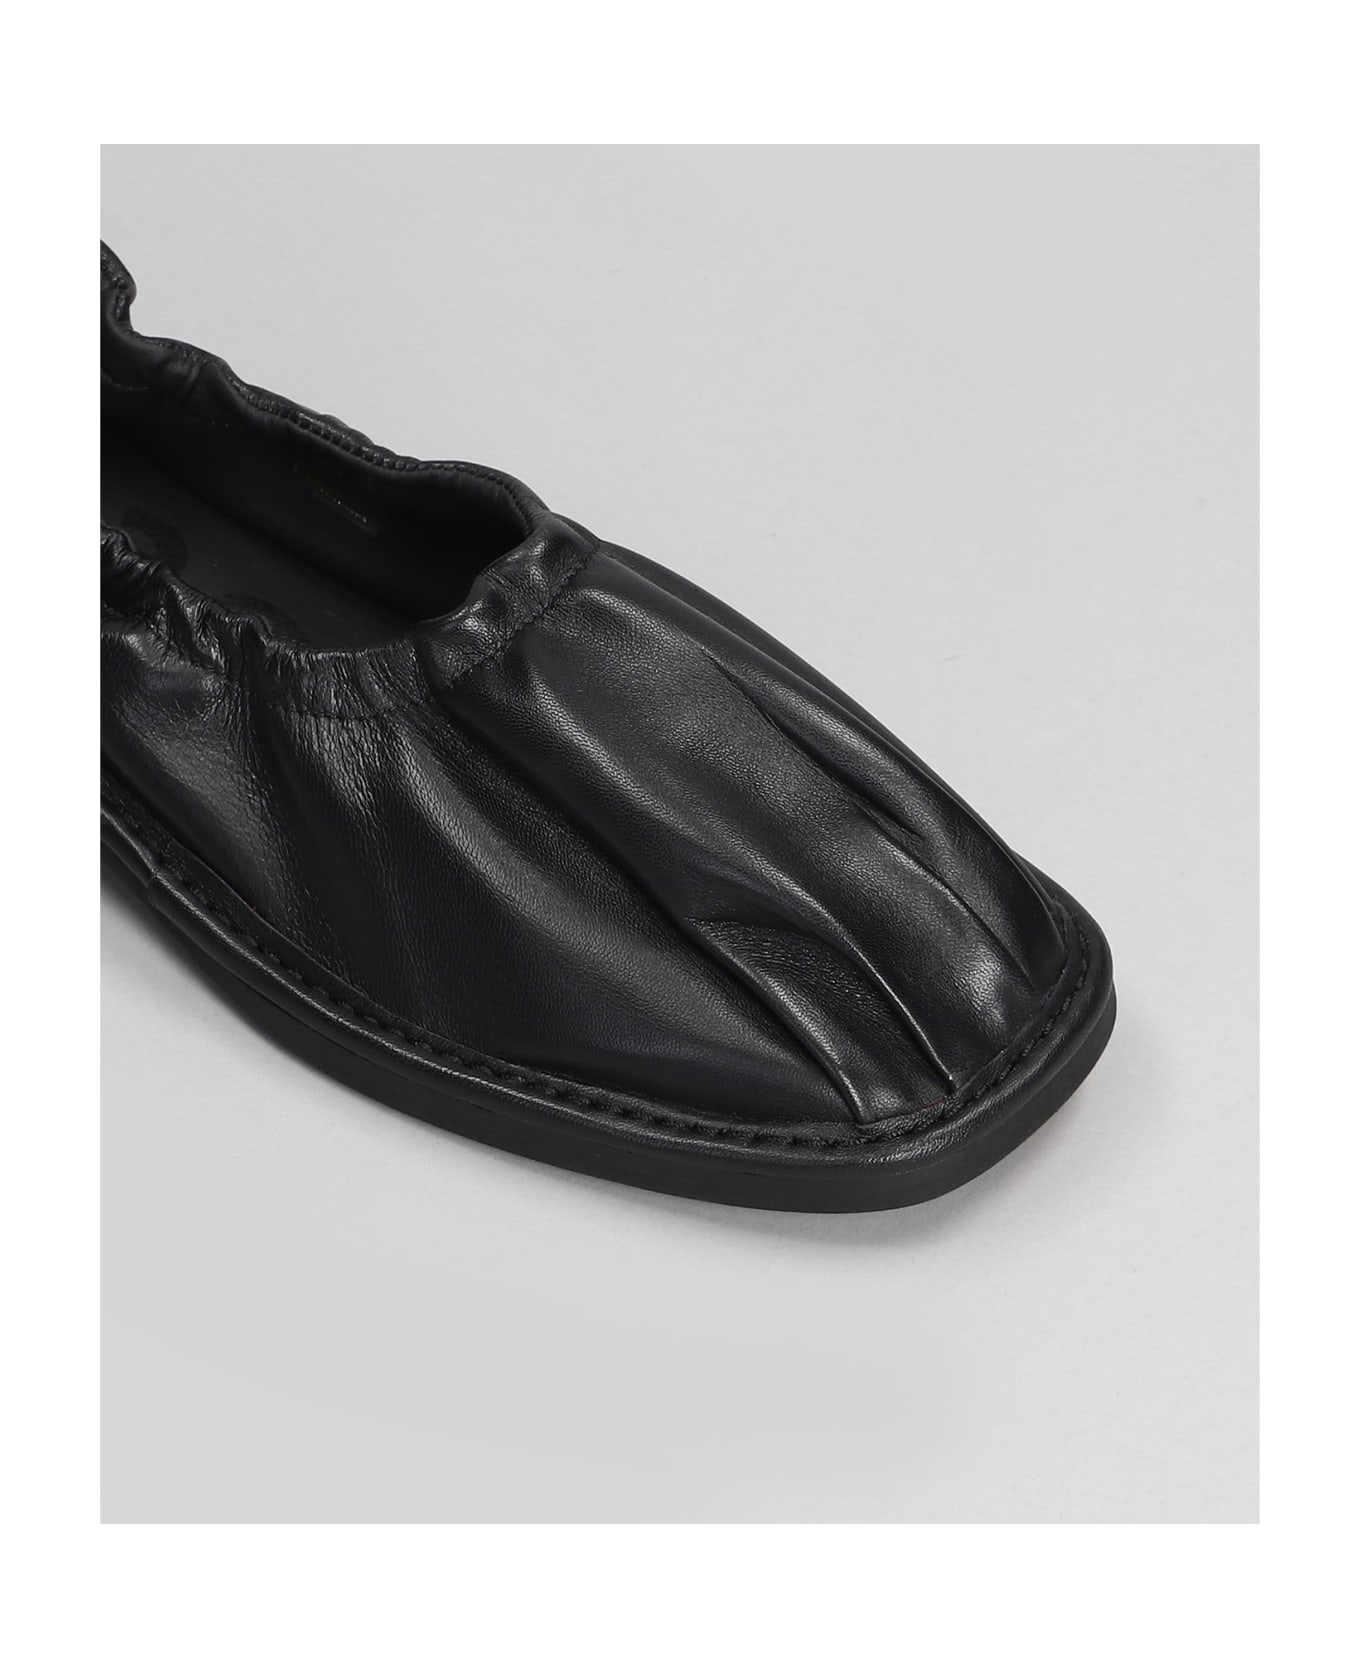 Séfr Loafers In Black Leather - black